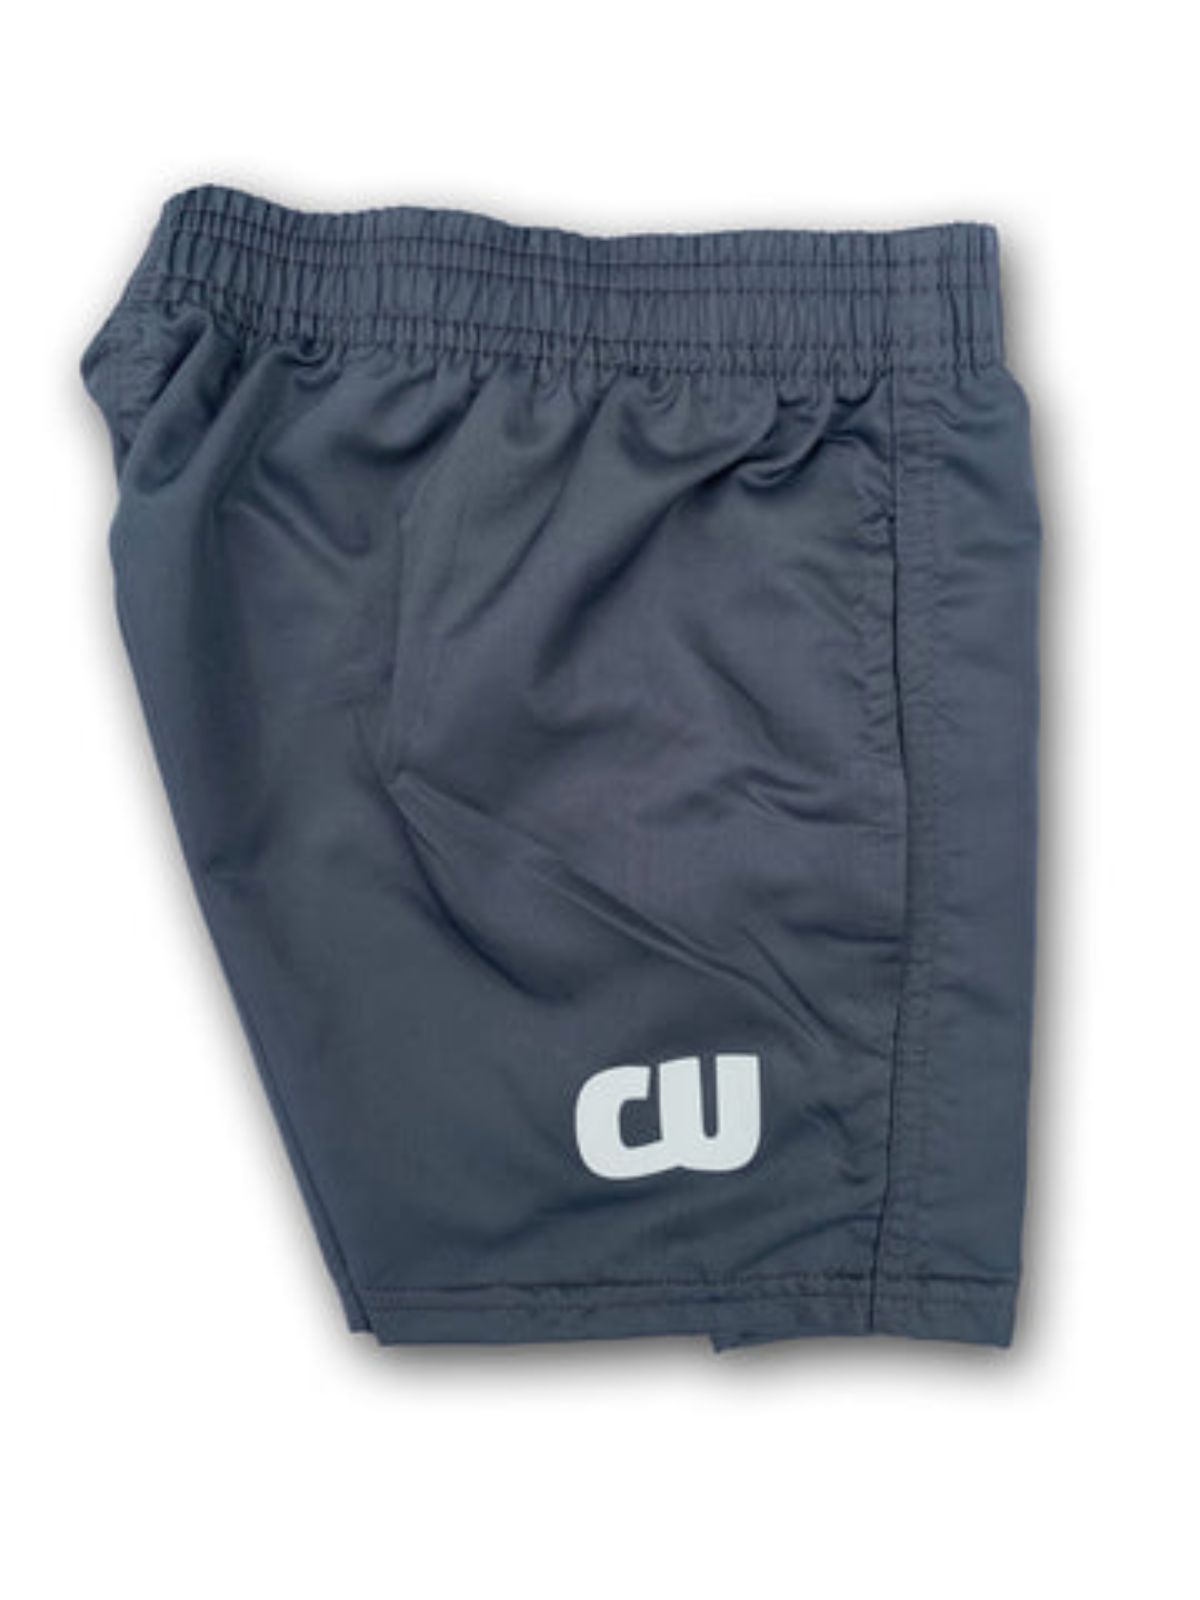 CURB 90s Shorts | Grey